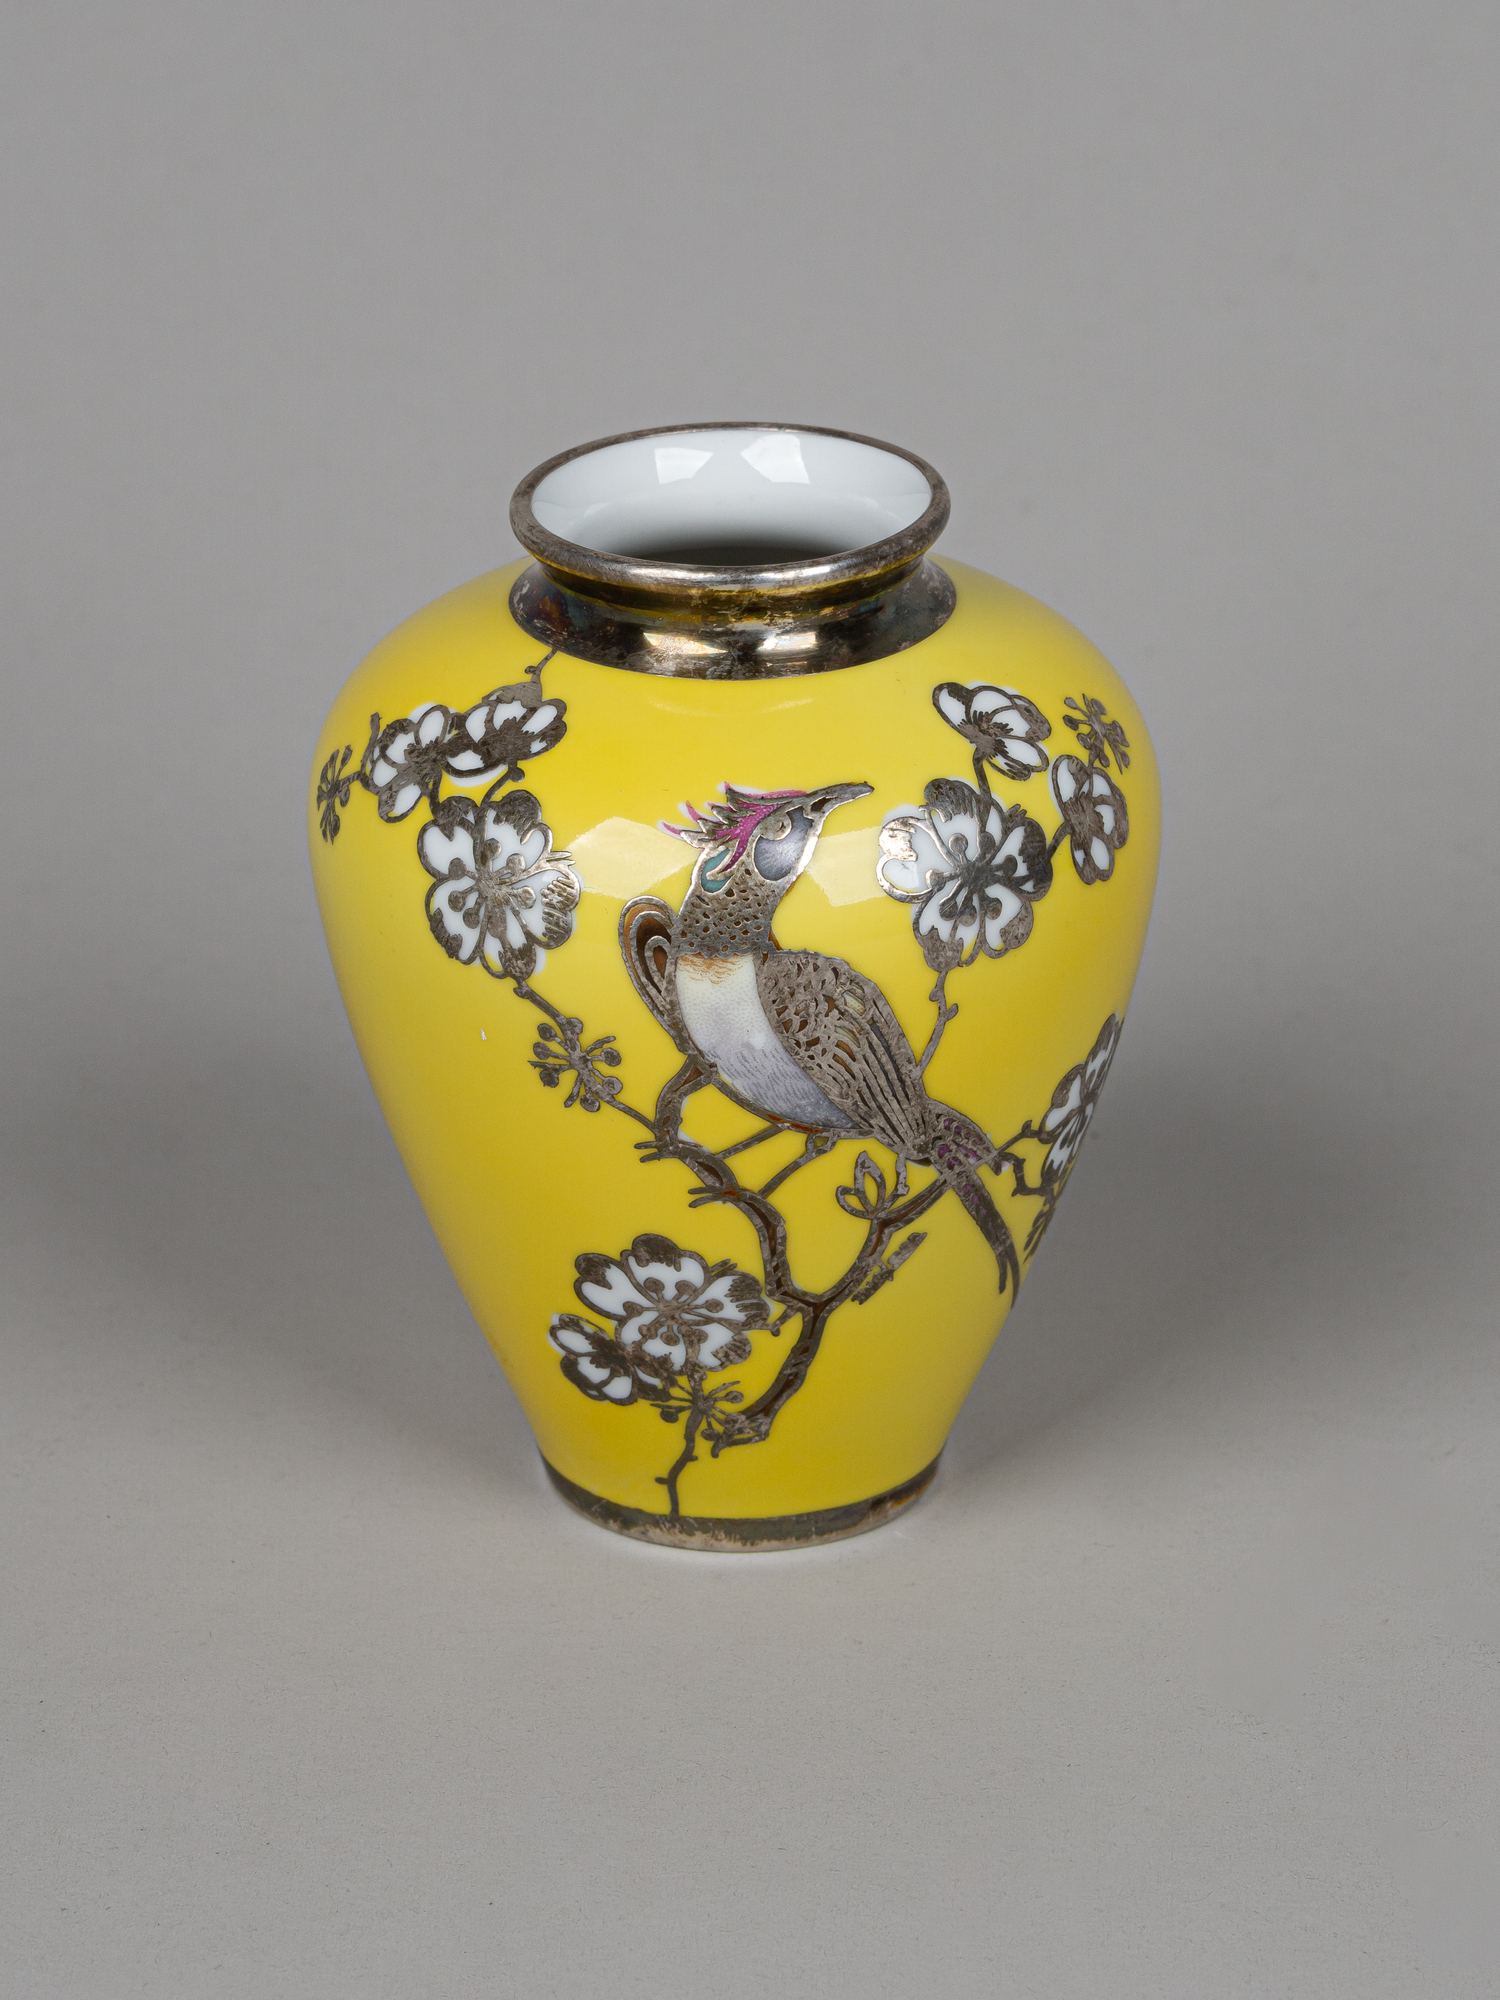 Ваза-клуазоне в китайском стиле «Птица на ветке вишни».<br>Германия, фирма Silberporzellanmanufaktur Plüderhausen Manfred Veyhl, 1945-1950-е годы.